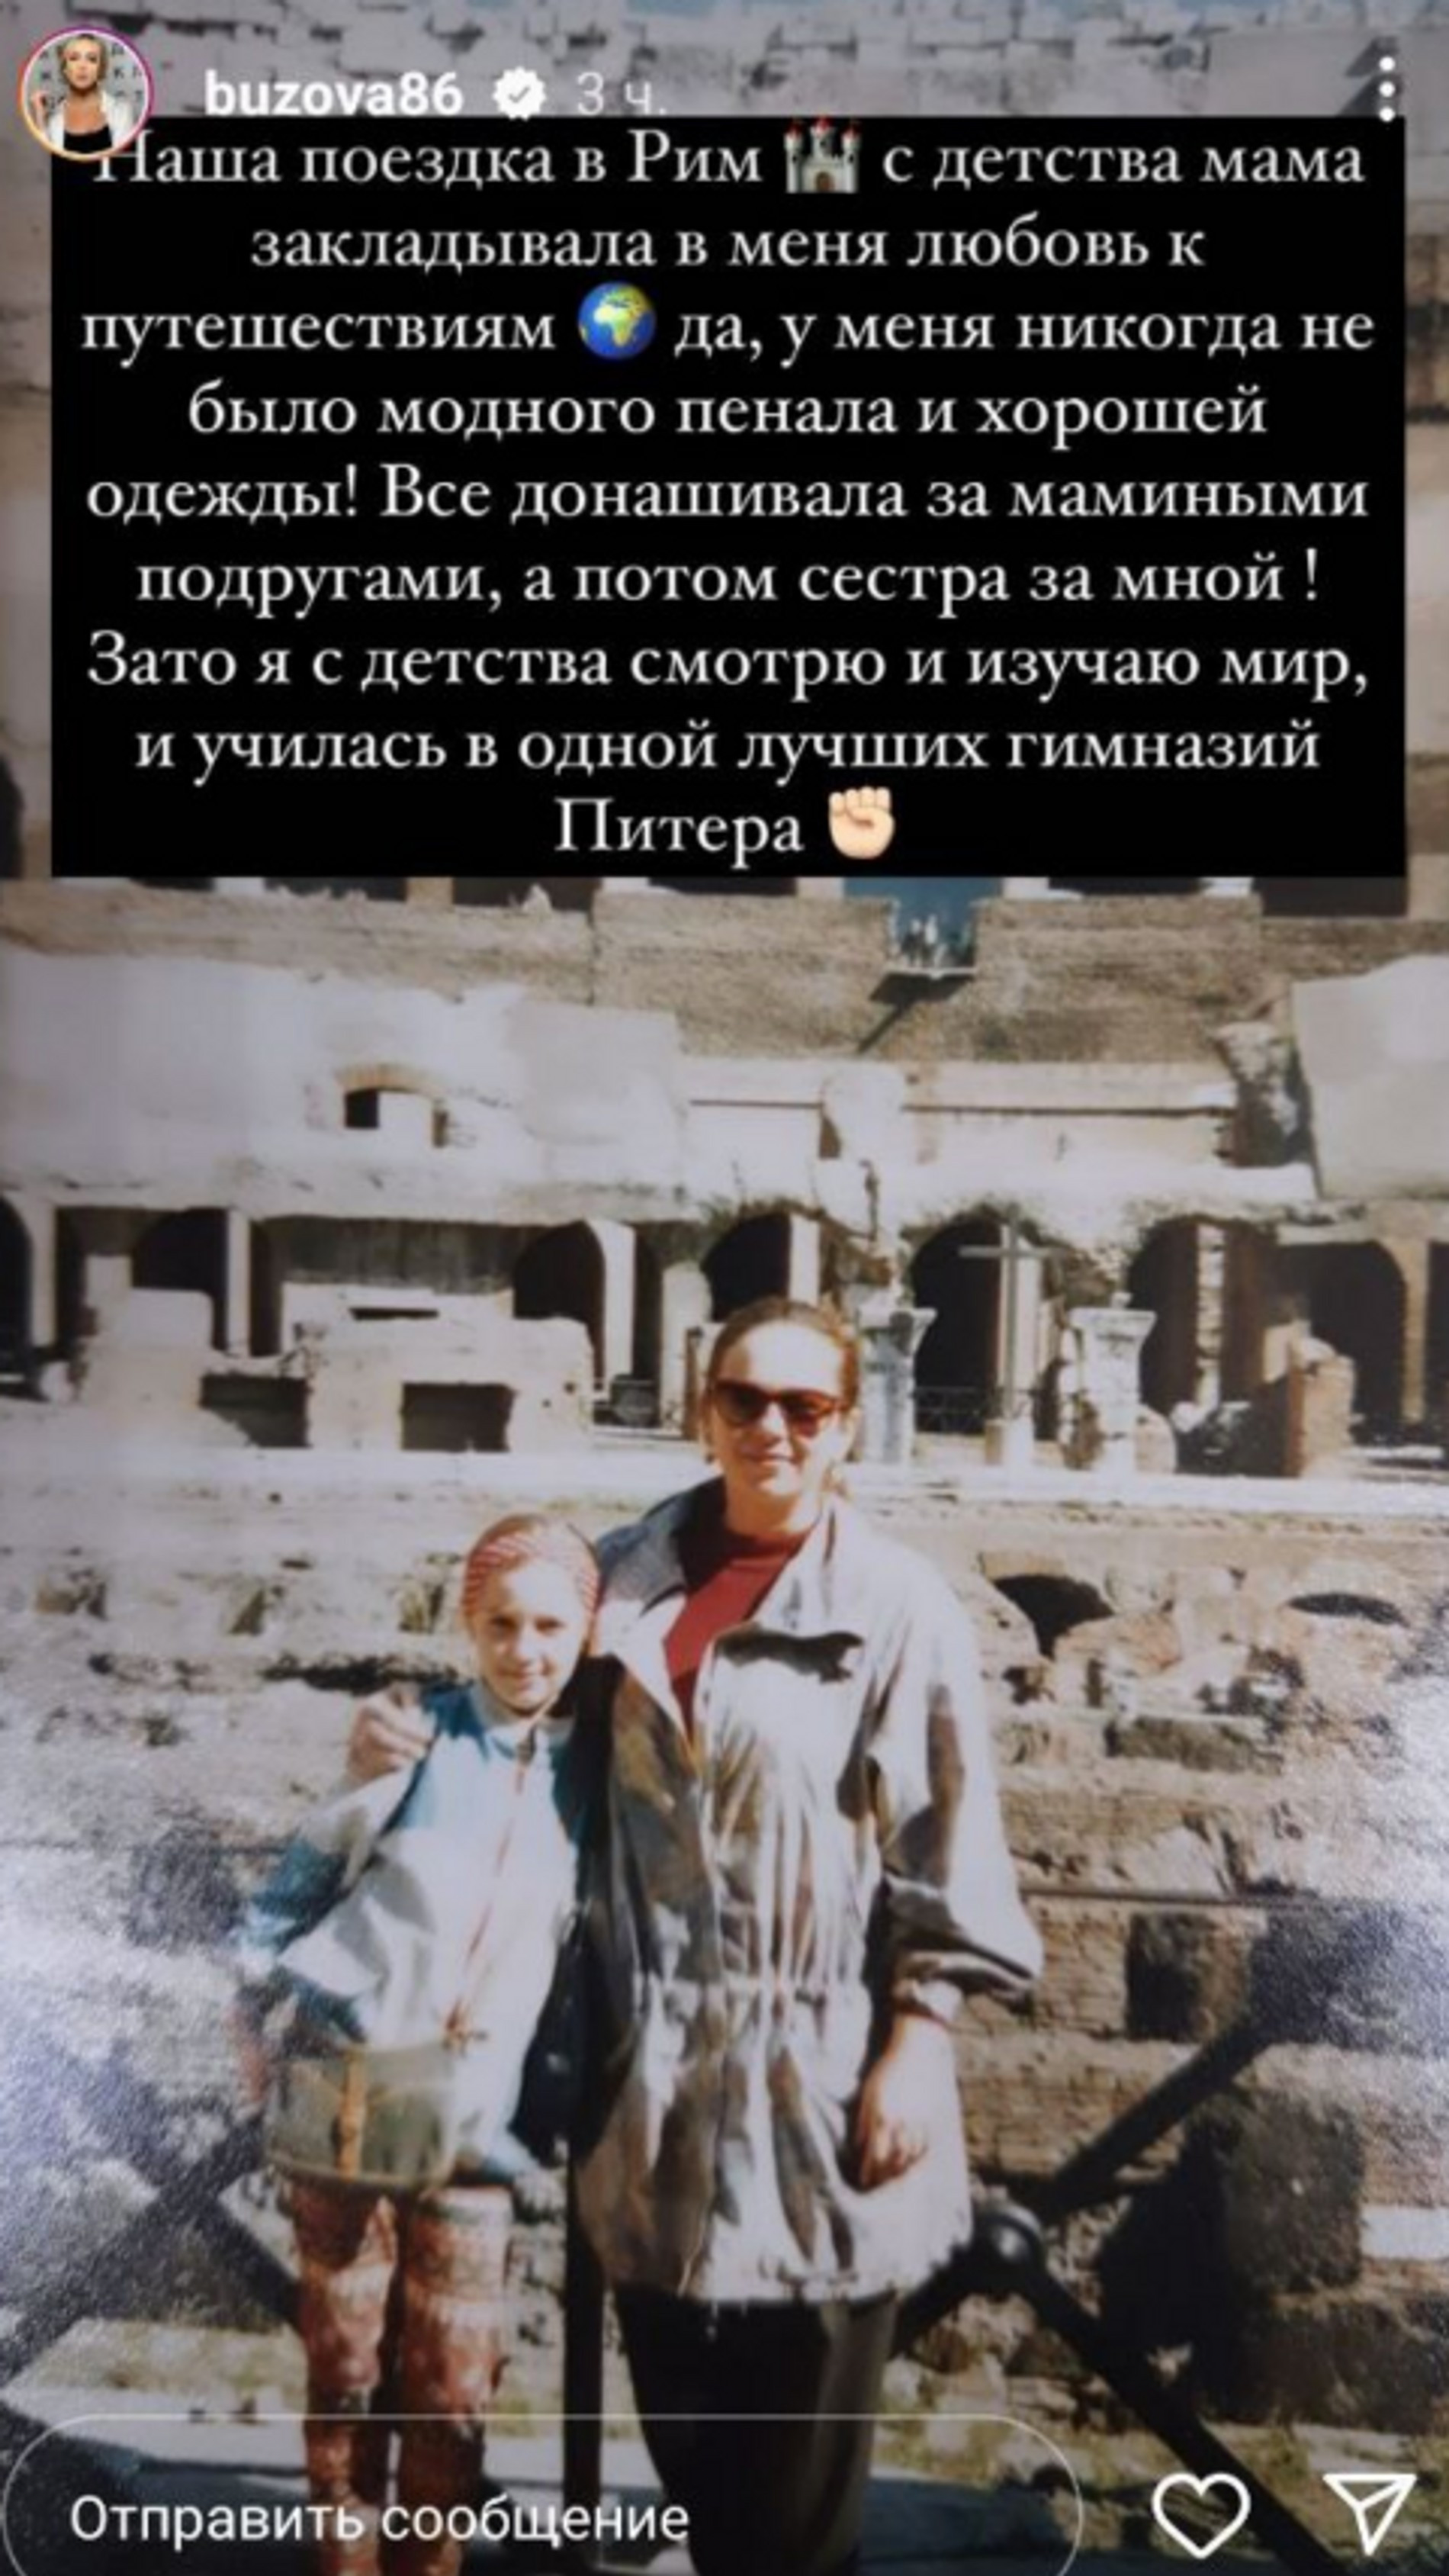 Ольга Бузова с мамой Ириной Александровной
Фото: Инстаграм (запрещен в РФ) @buzova